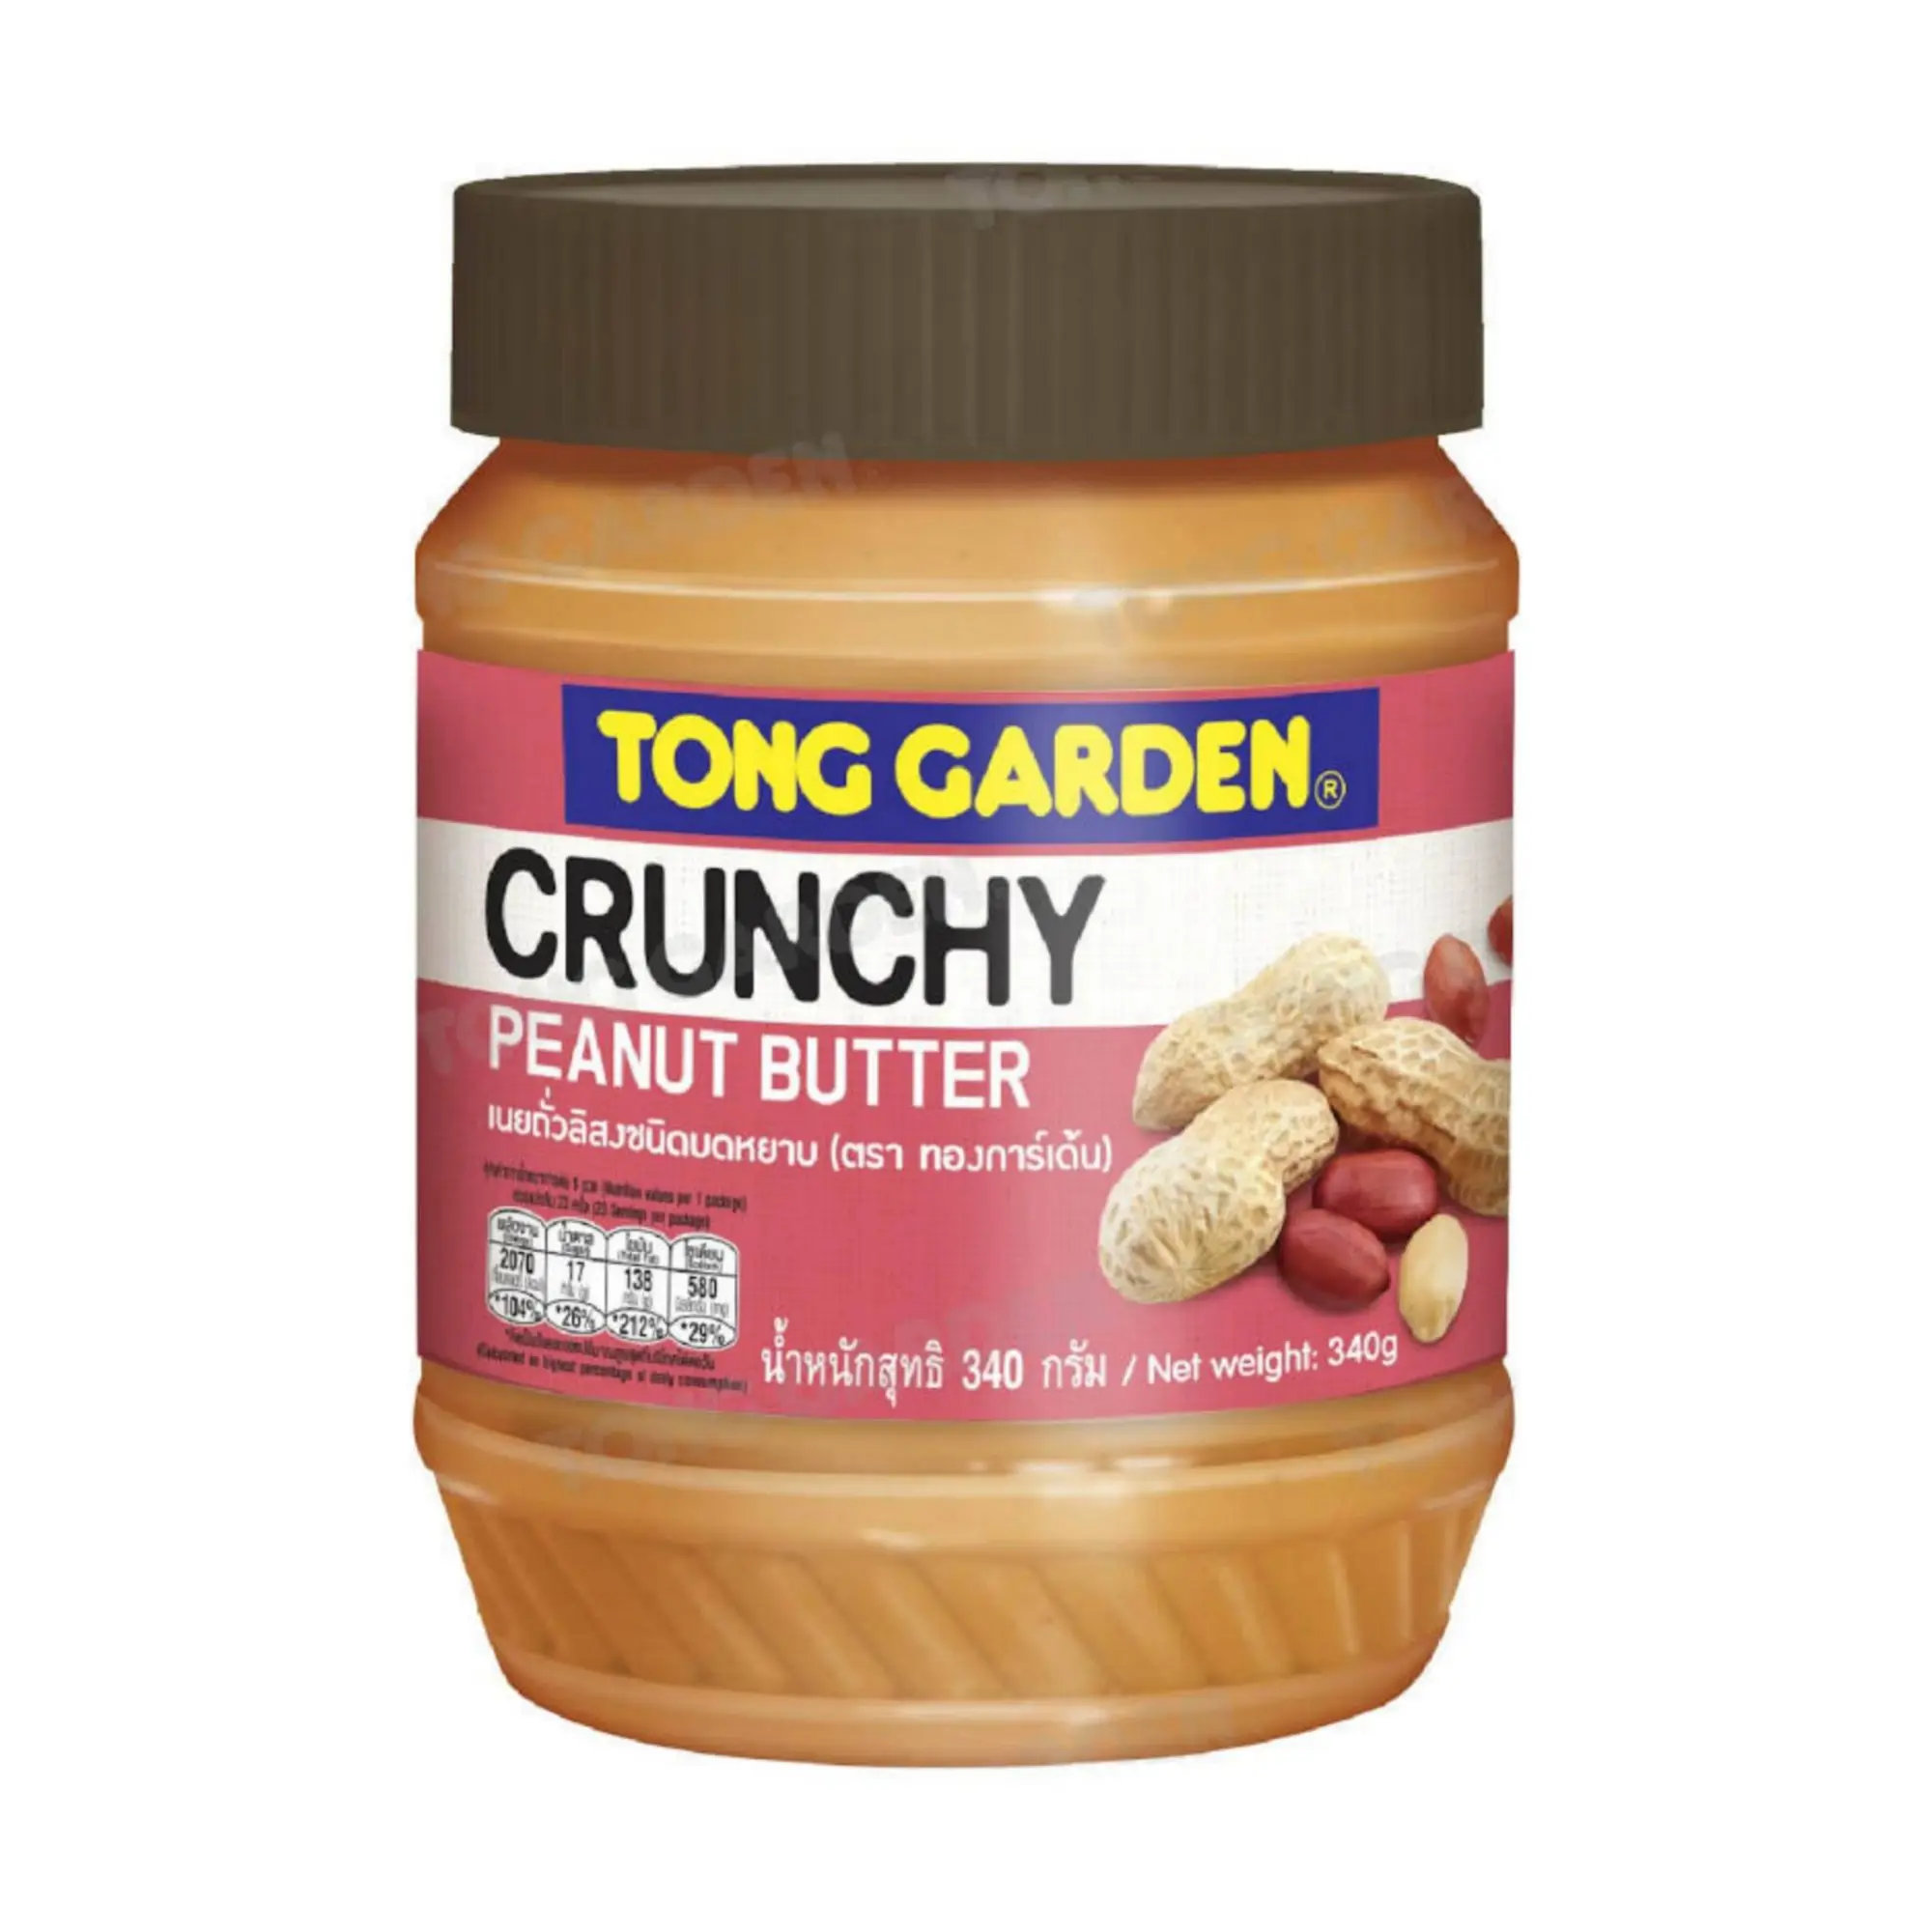 Tong Garden ทองการ์เด้นเนยถั่วแบบบดหยาบ (Crunchy Peanut Butter) 340g